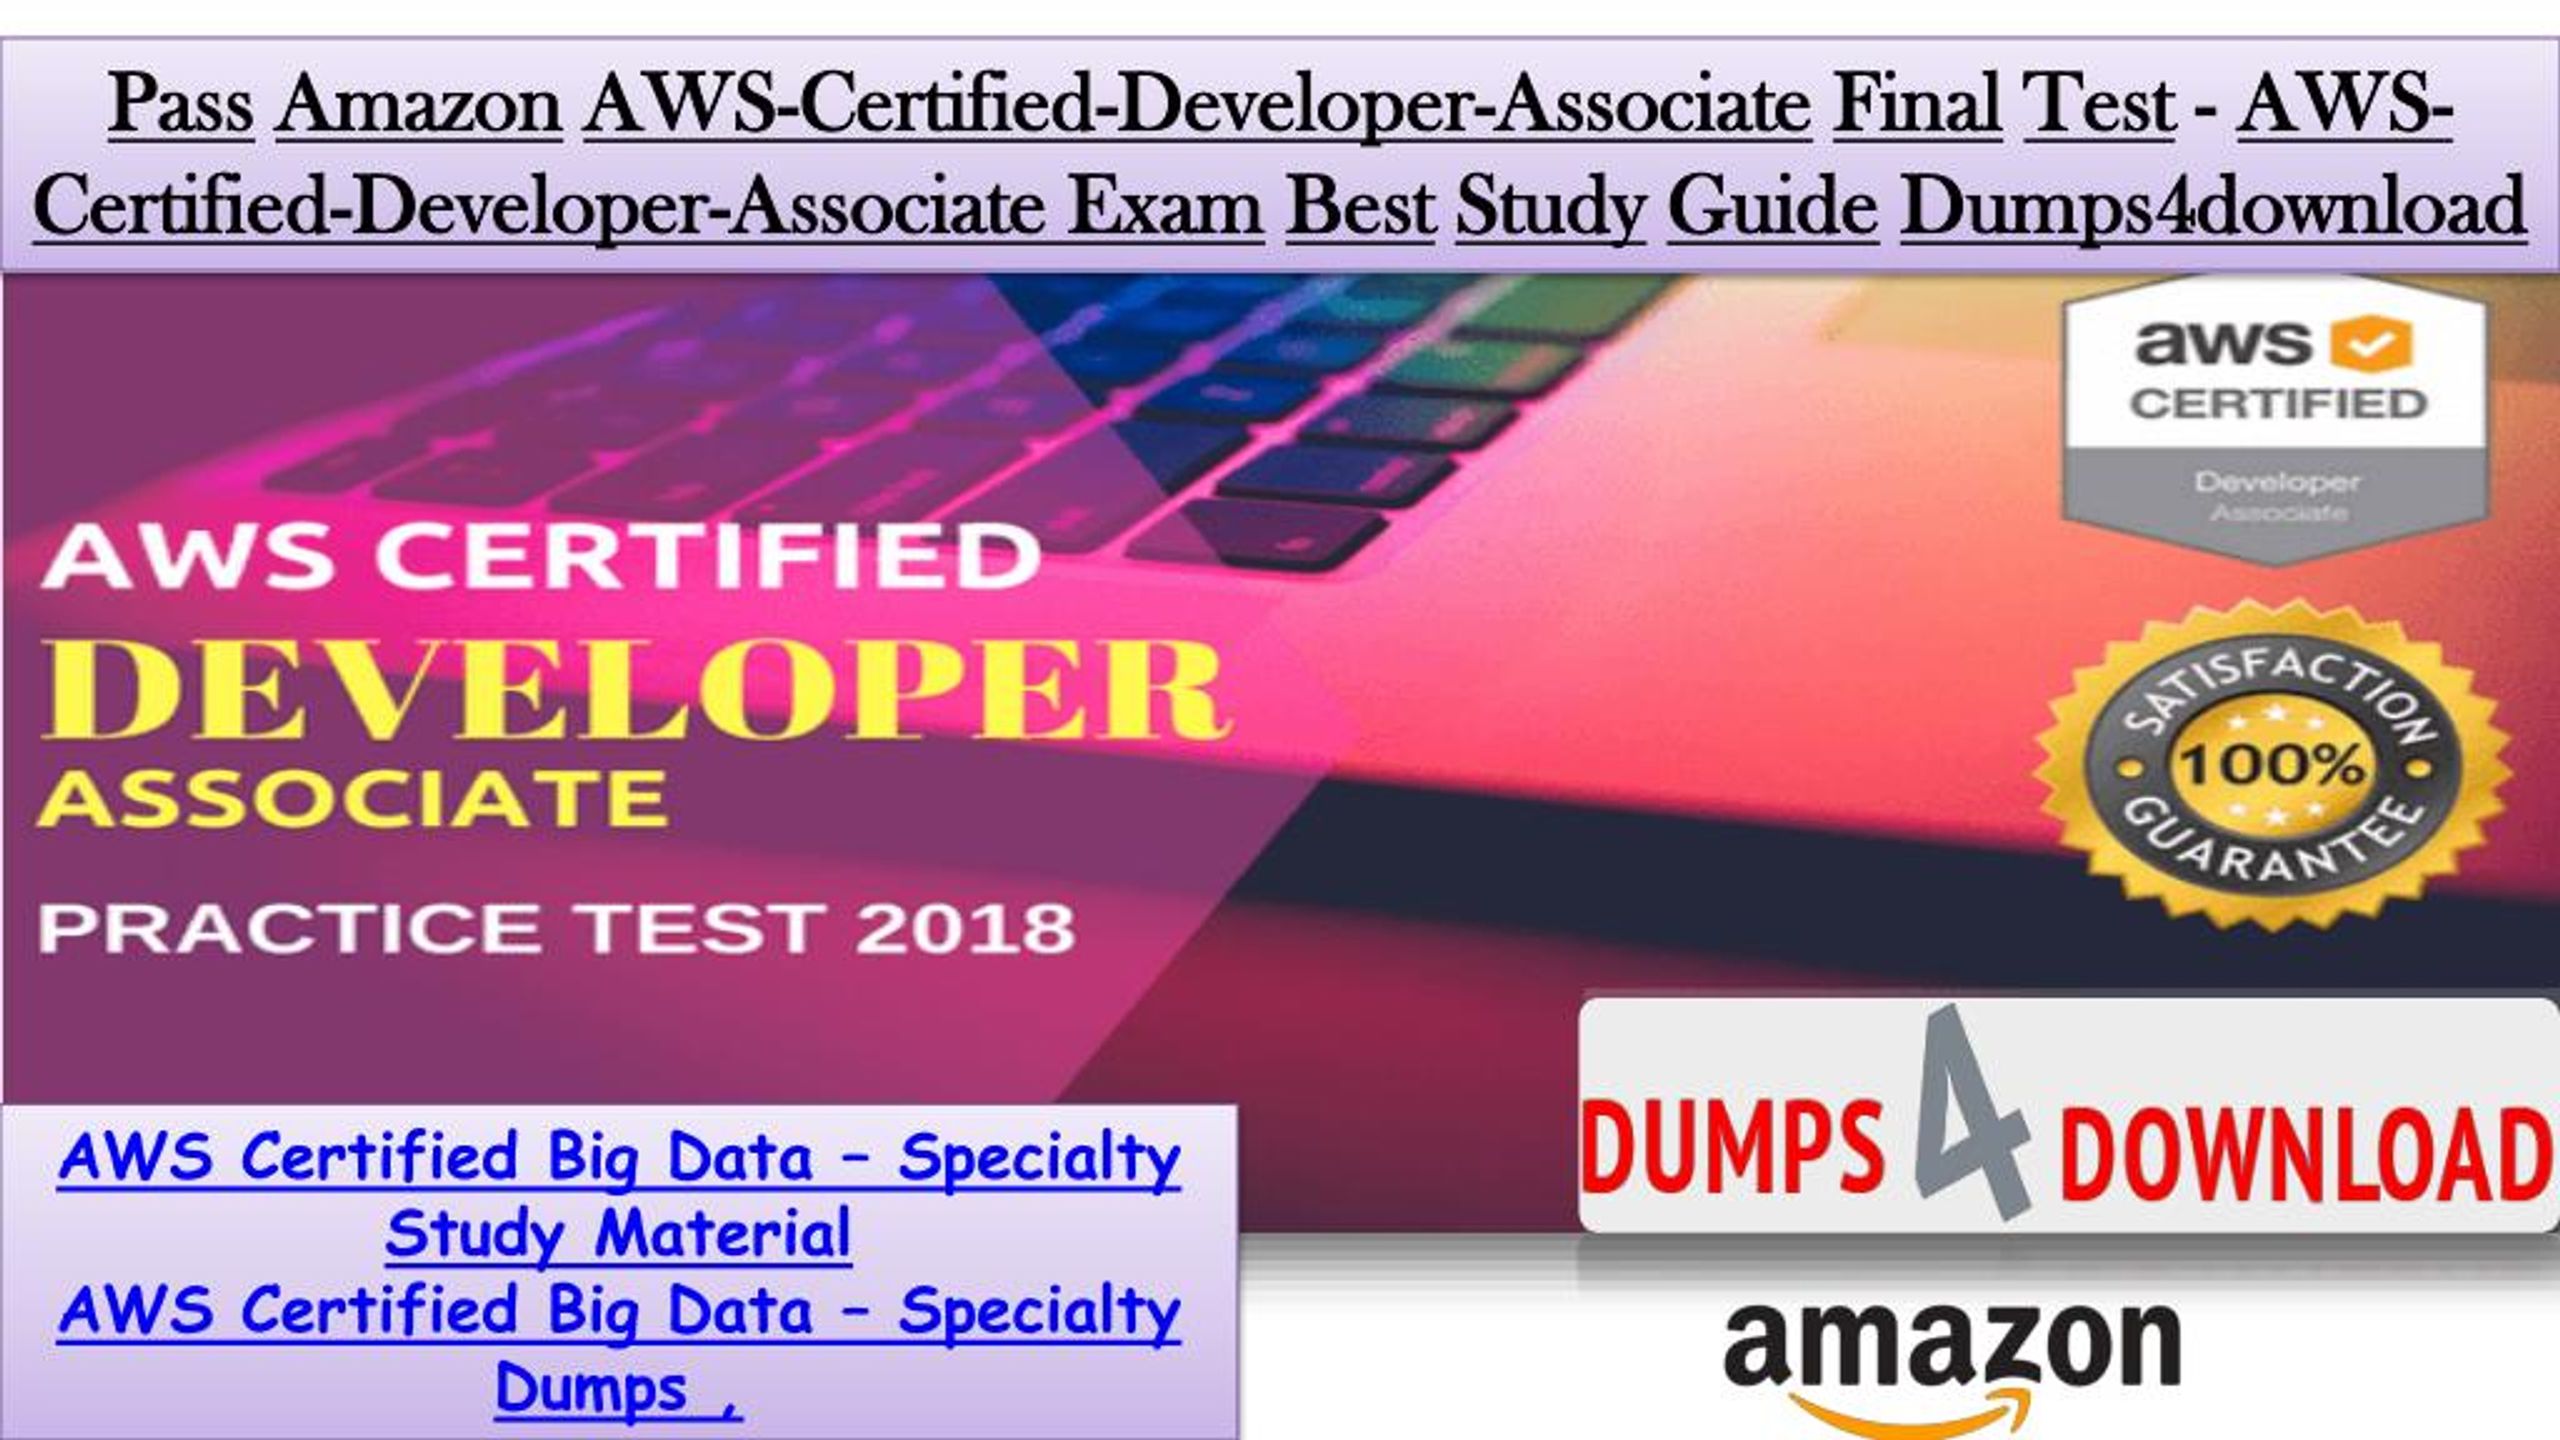 Exam Dumps AWS-Certified-Data-Analytics-Specialty Demo